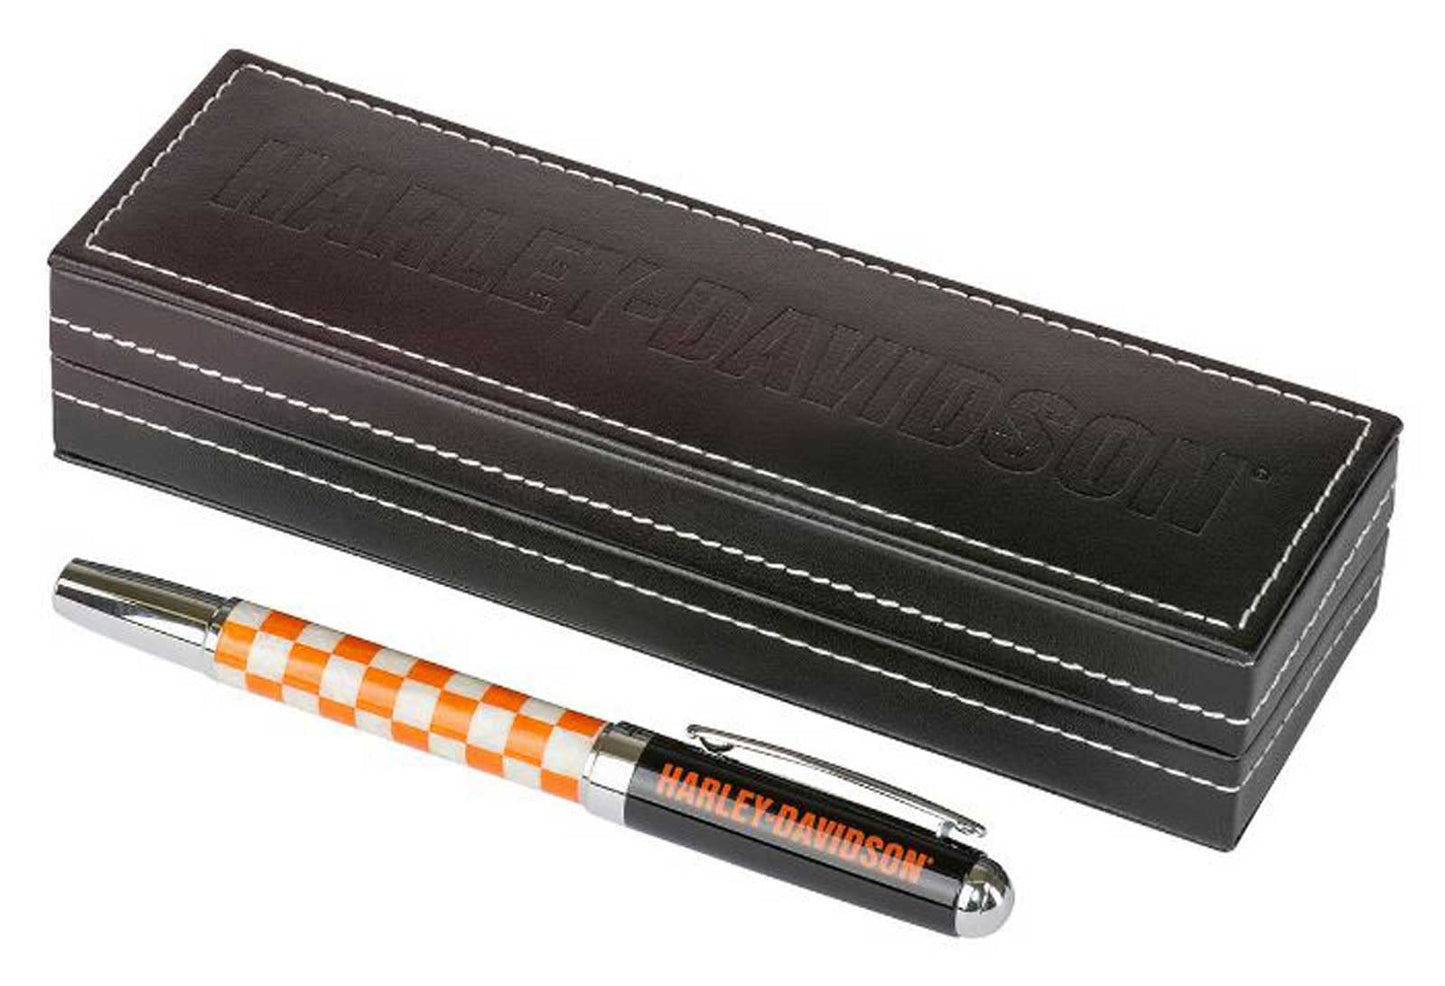 Harley-Davidson Checkered Orange Pen with Black Gift Box